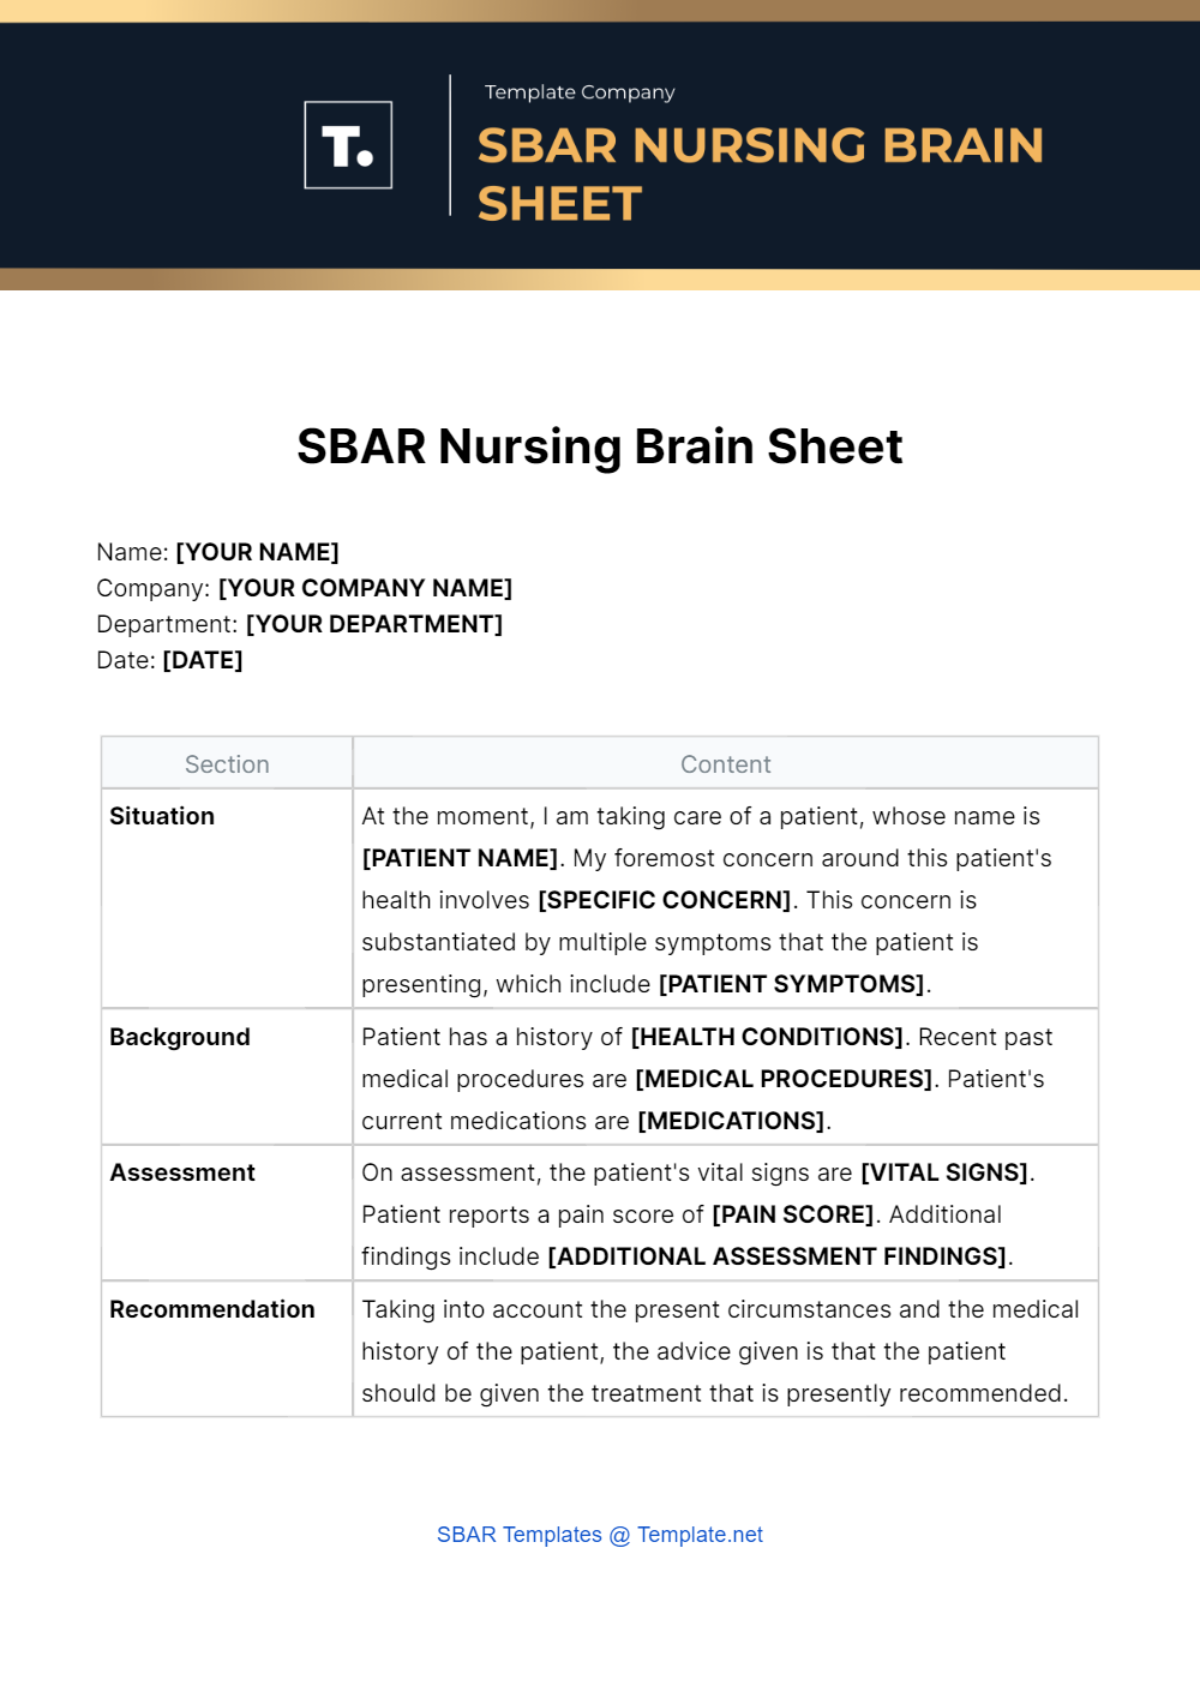 SBAR Nursing Brain Sheet Template